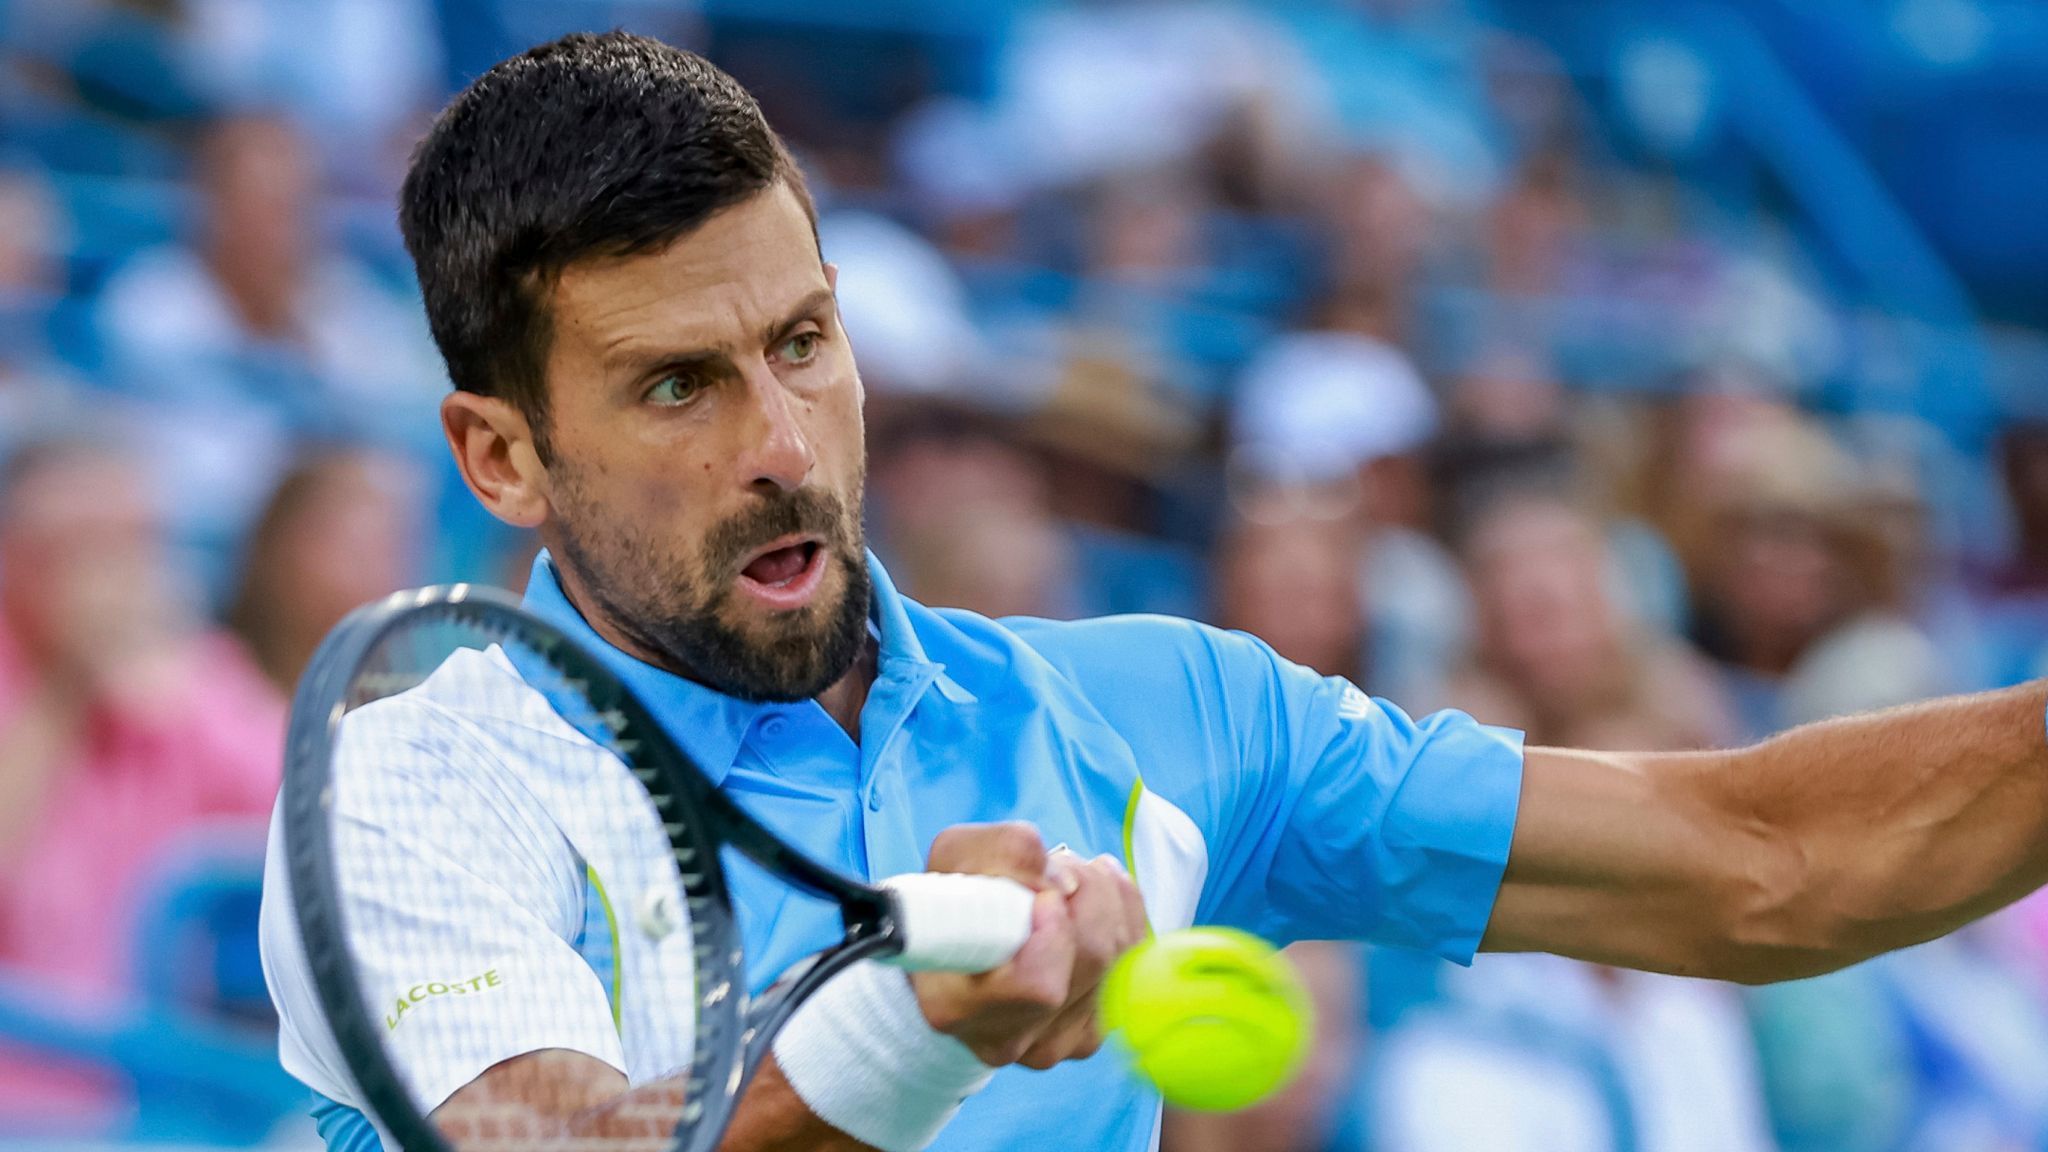 Novak Djokovic wins on his US return at Cincinnati Open after two-year absence Tennis News Sky Sports